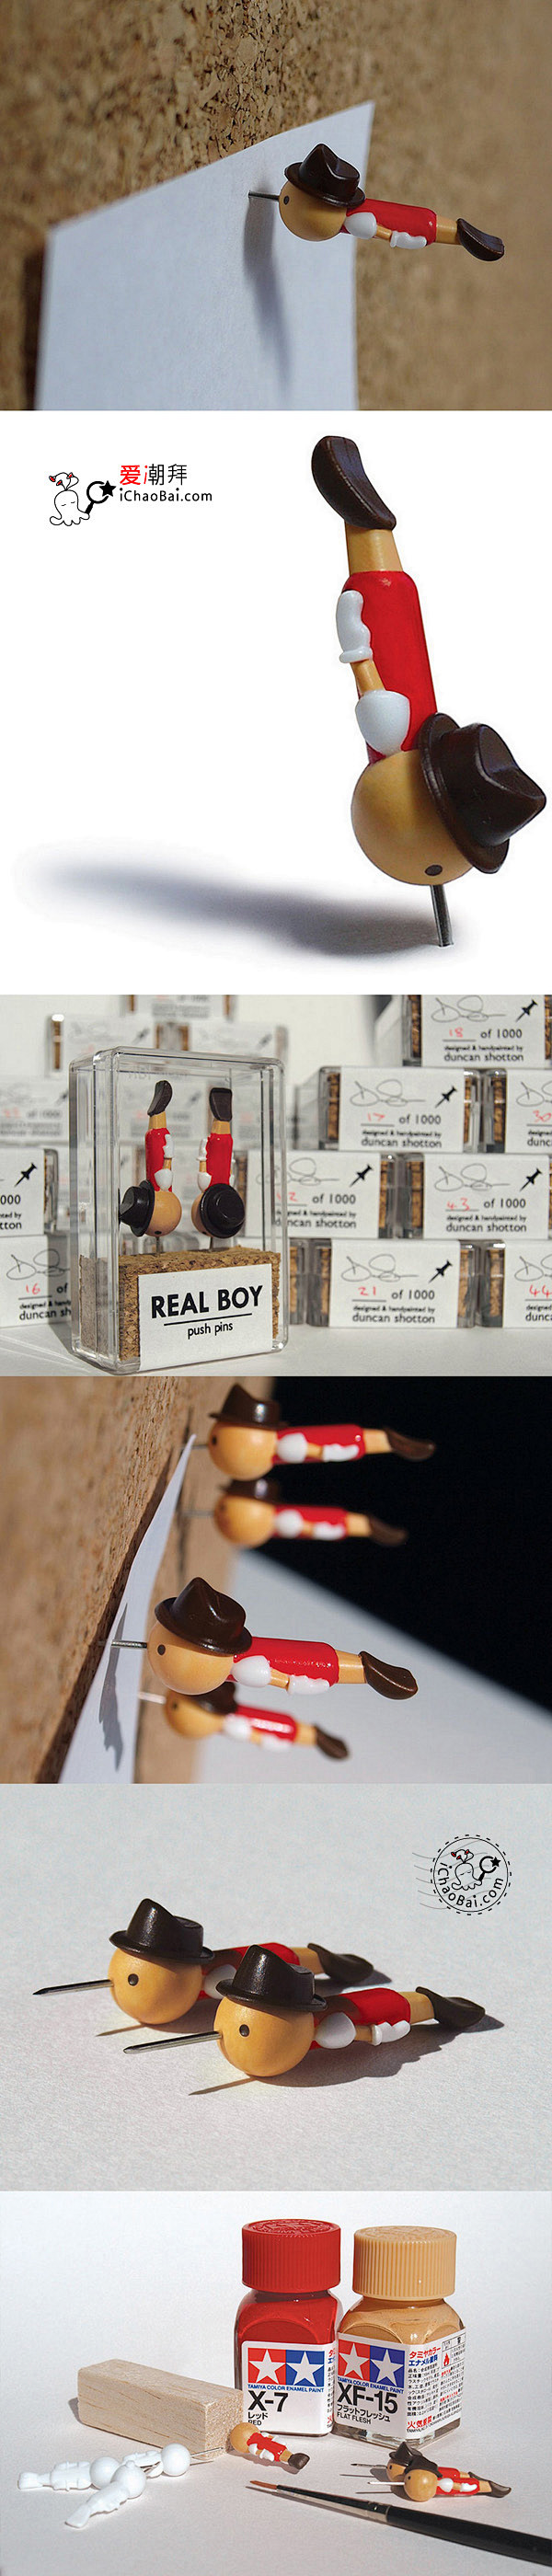 Real boy pin 匹诺曹图钉？~...